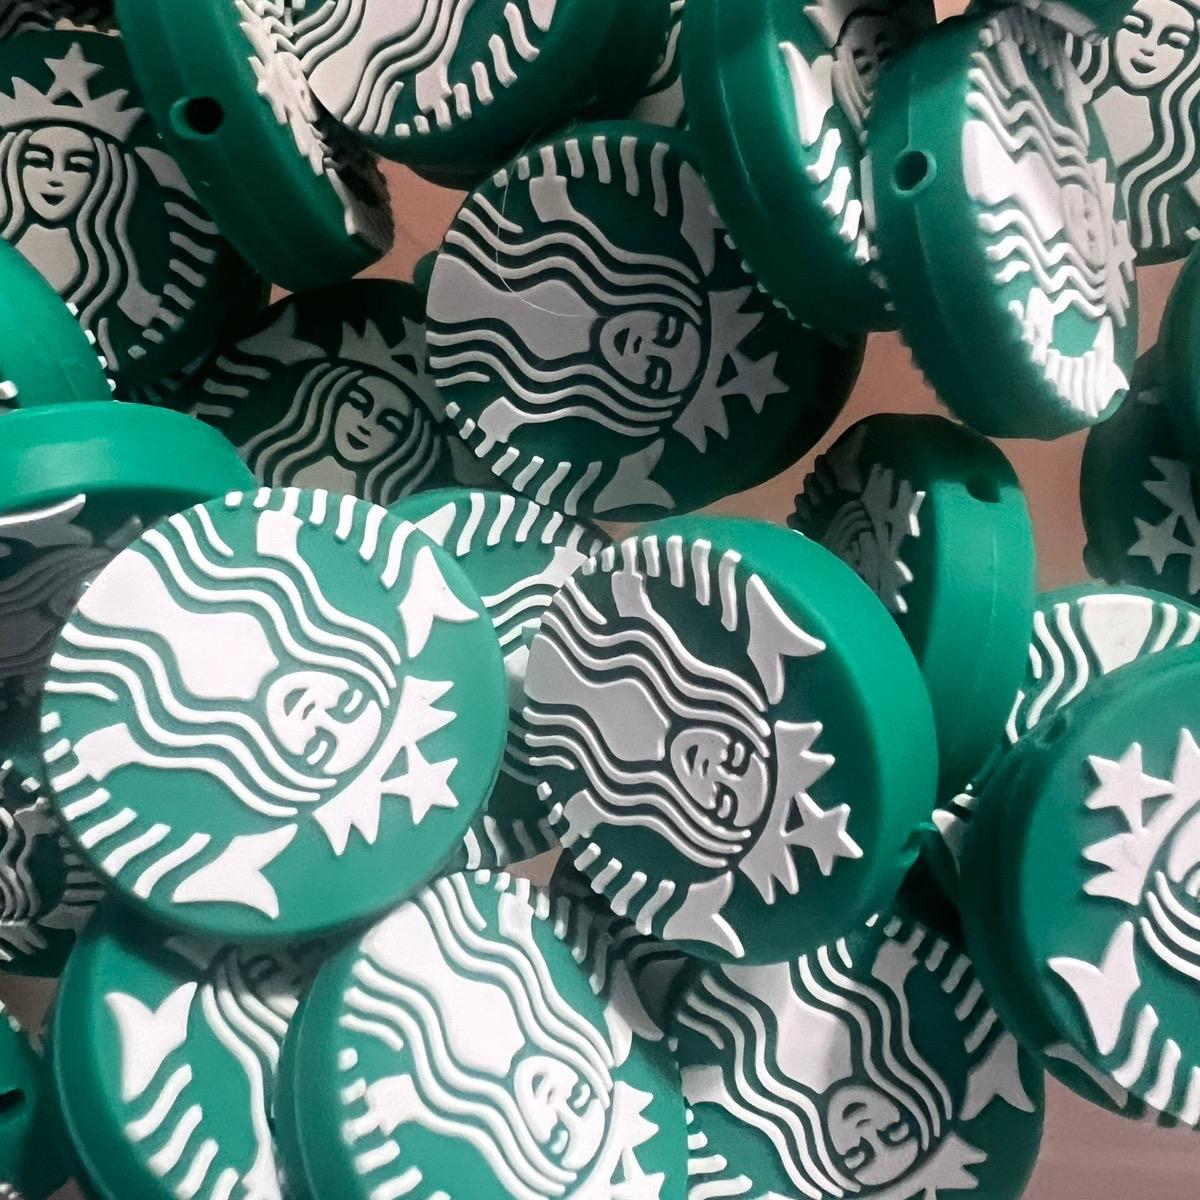 Silicone Starbucks beads